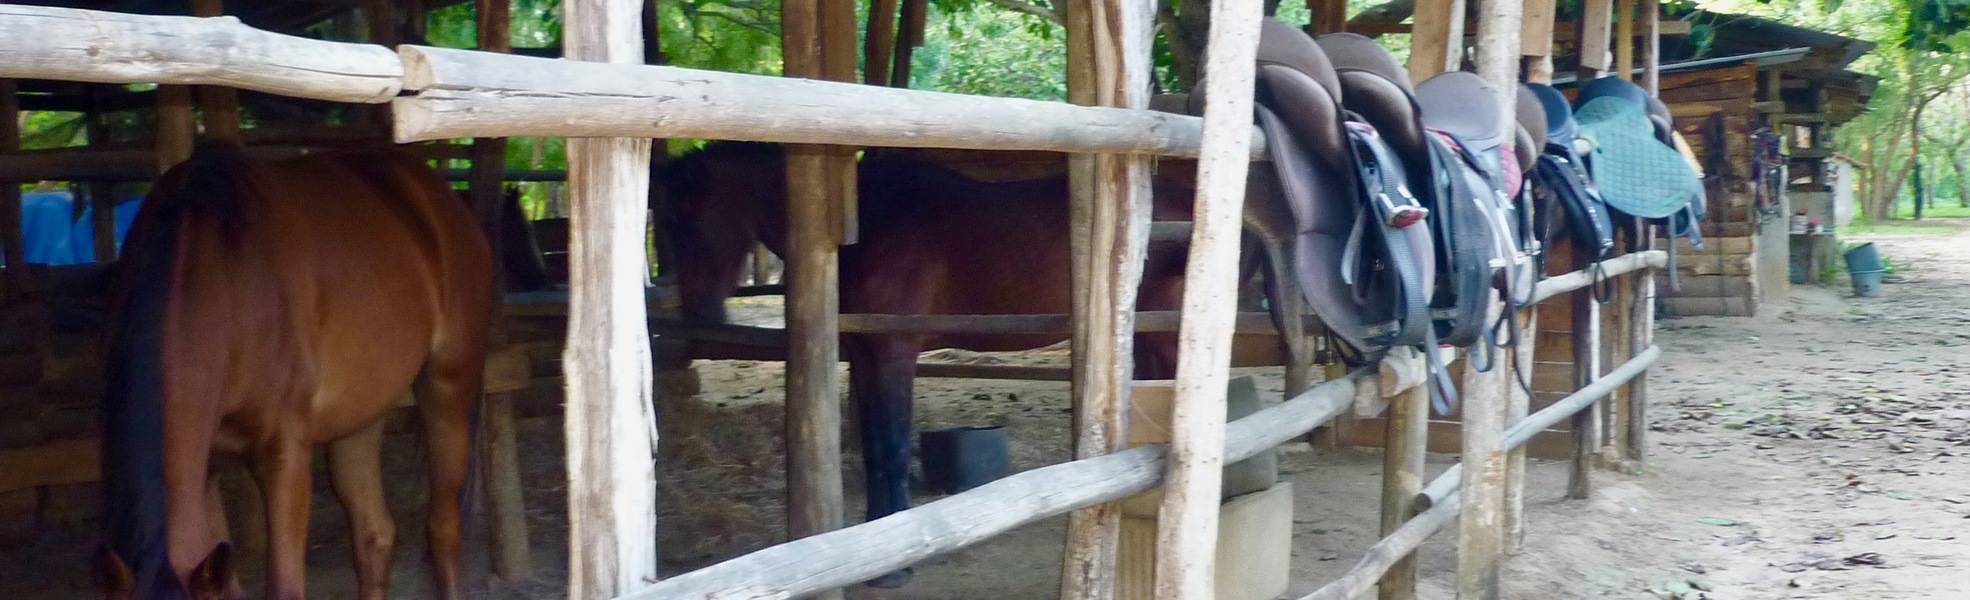 Volunteer work on the farm with horses in Iringa